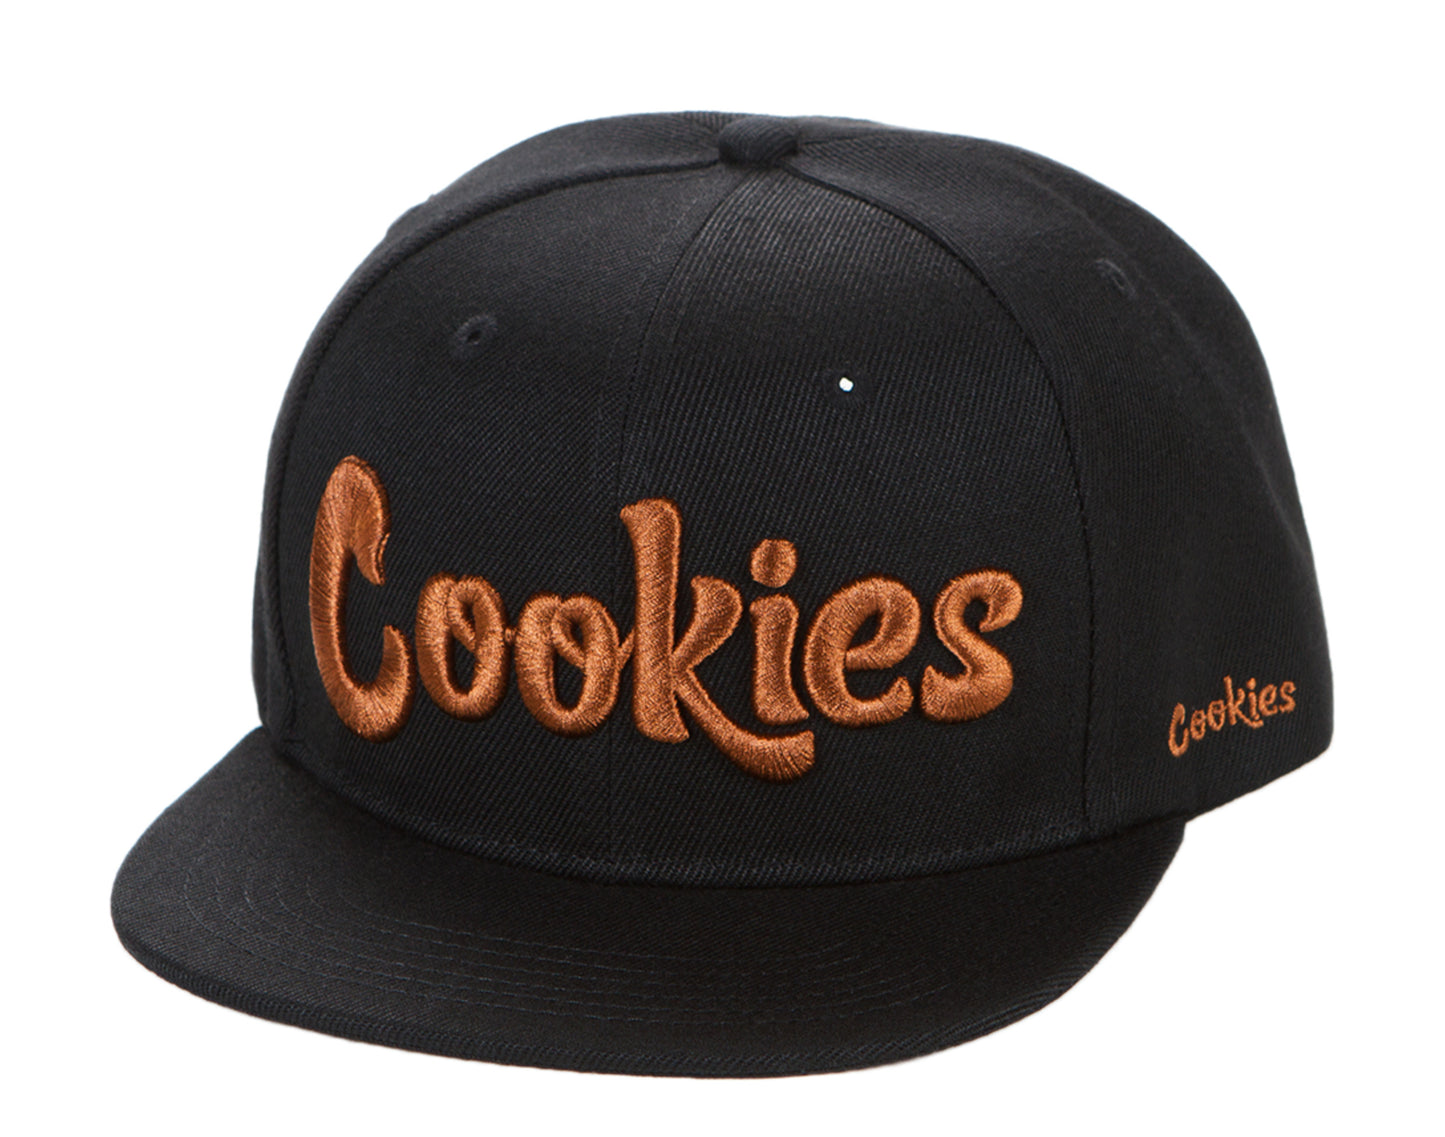 Cookies Original Logo Thin Mint Adjustable Black/Brown Snapback 1546X4391-BBR